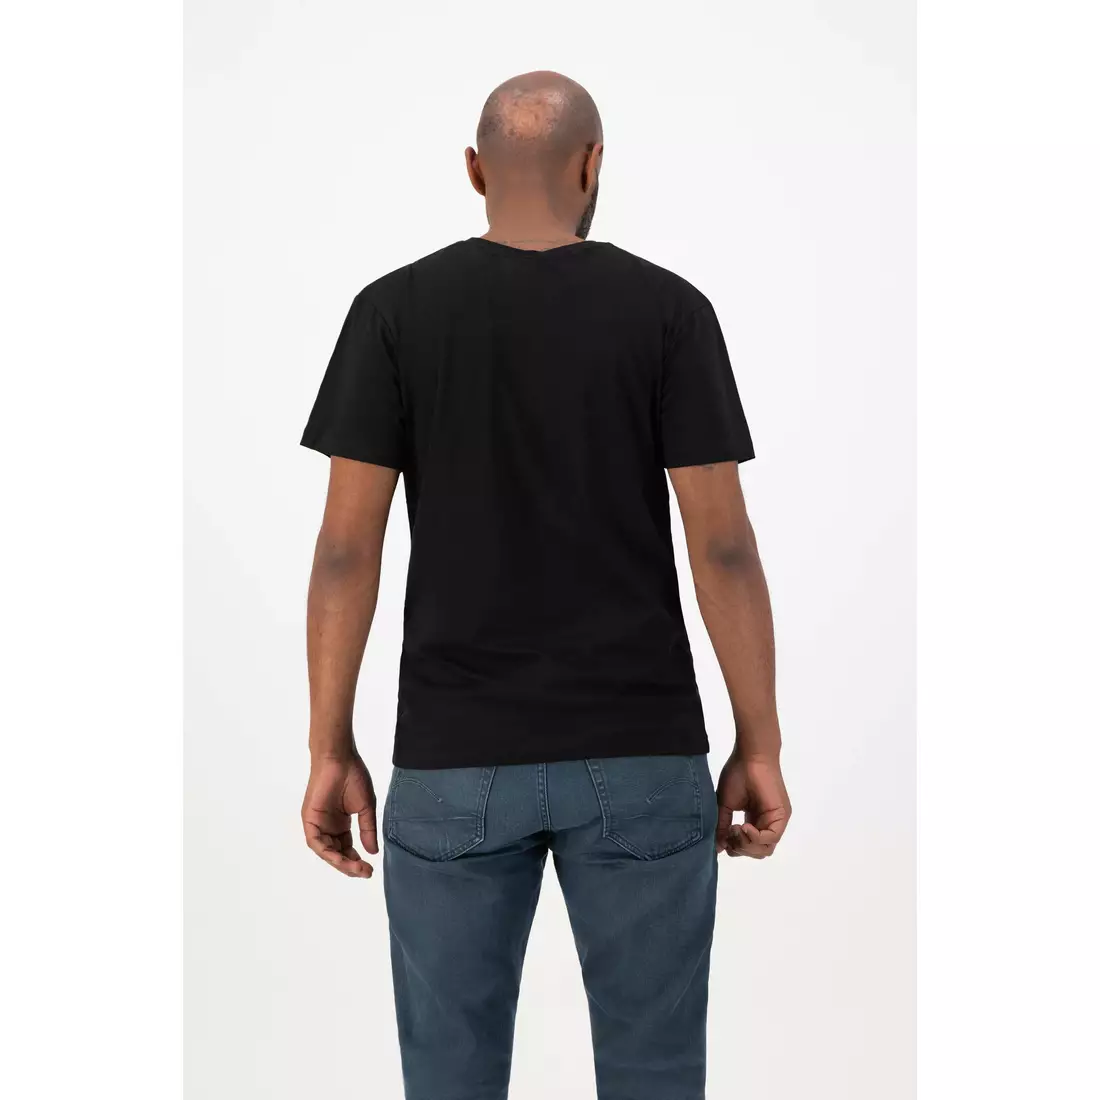 Rogelli men's t-shirt GRAPHIC black